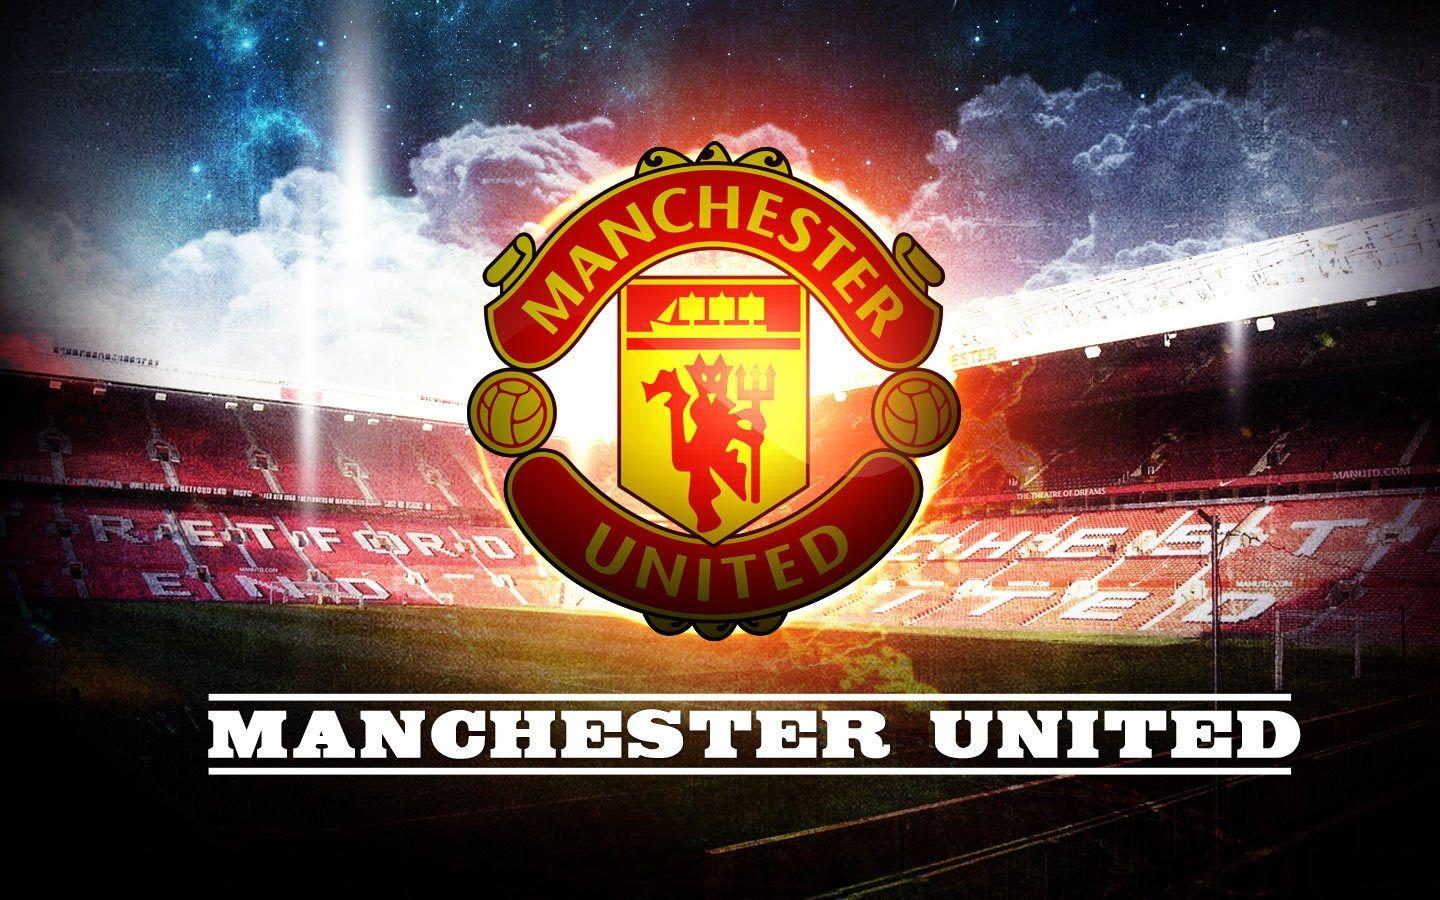 Manchester United Logo Football Club Wallpaper For PC Wallpaper